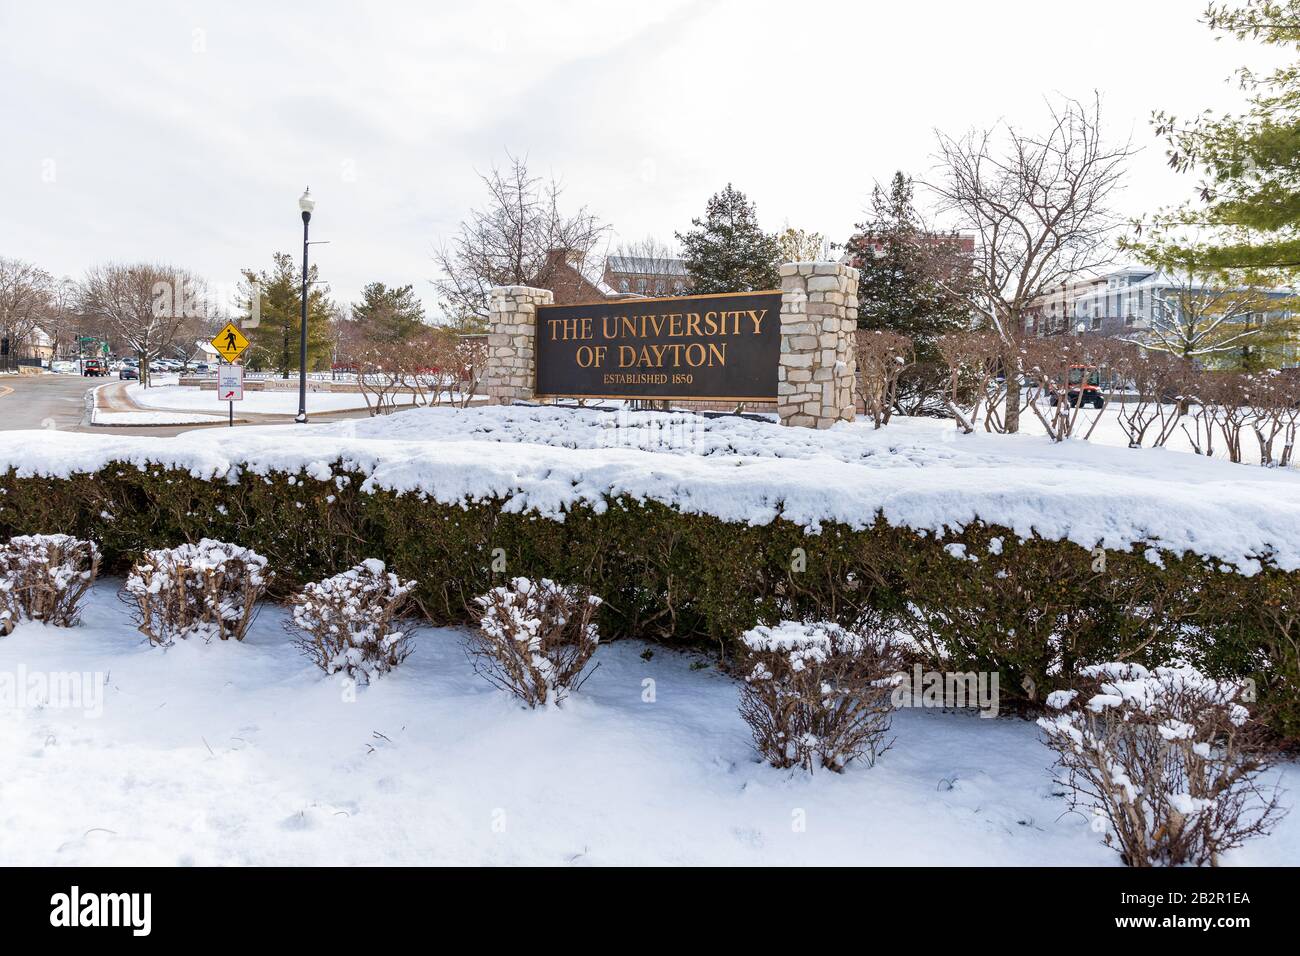 Dayton, OH, USA / February 28, 2020: University of Dayton sign, with fresh winter snow on the ground. Stock Photo